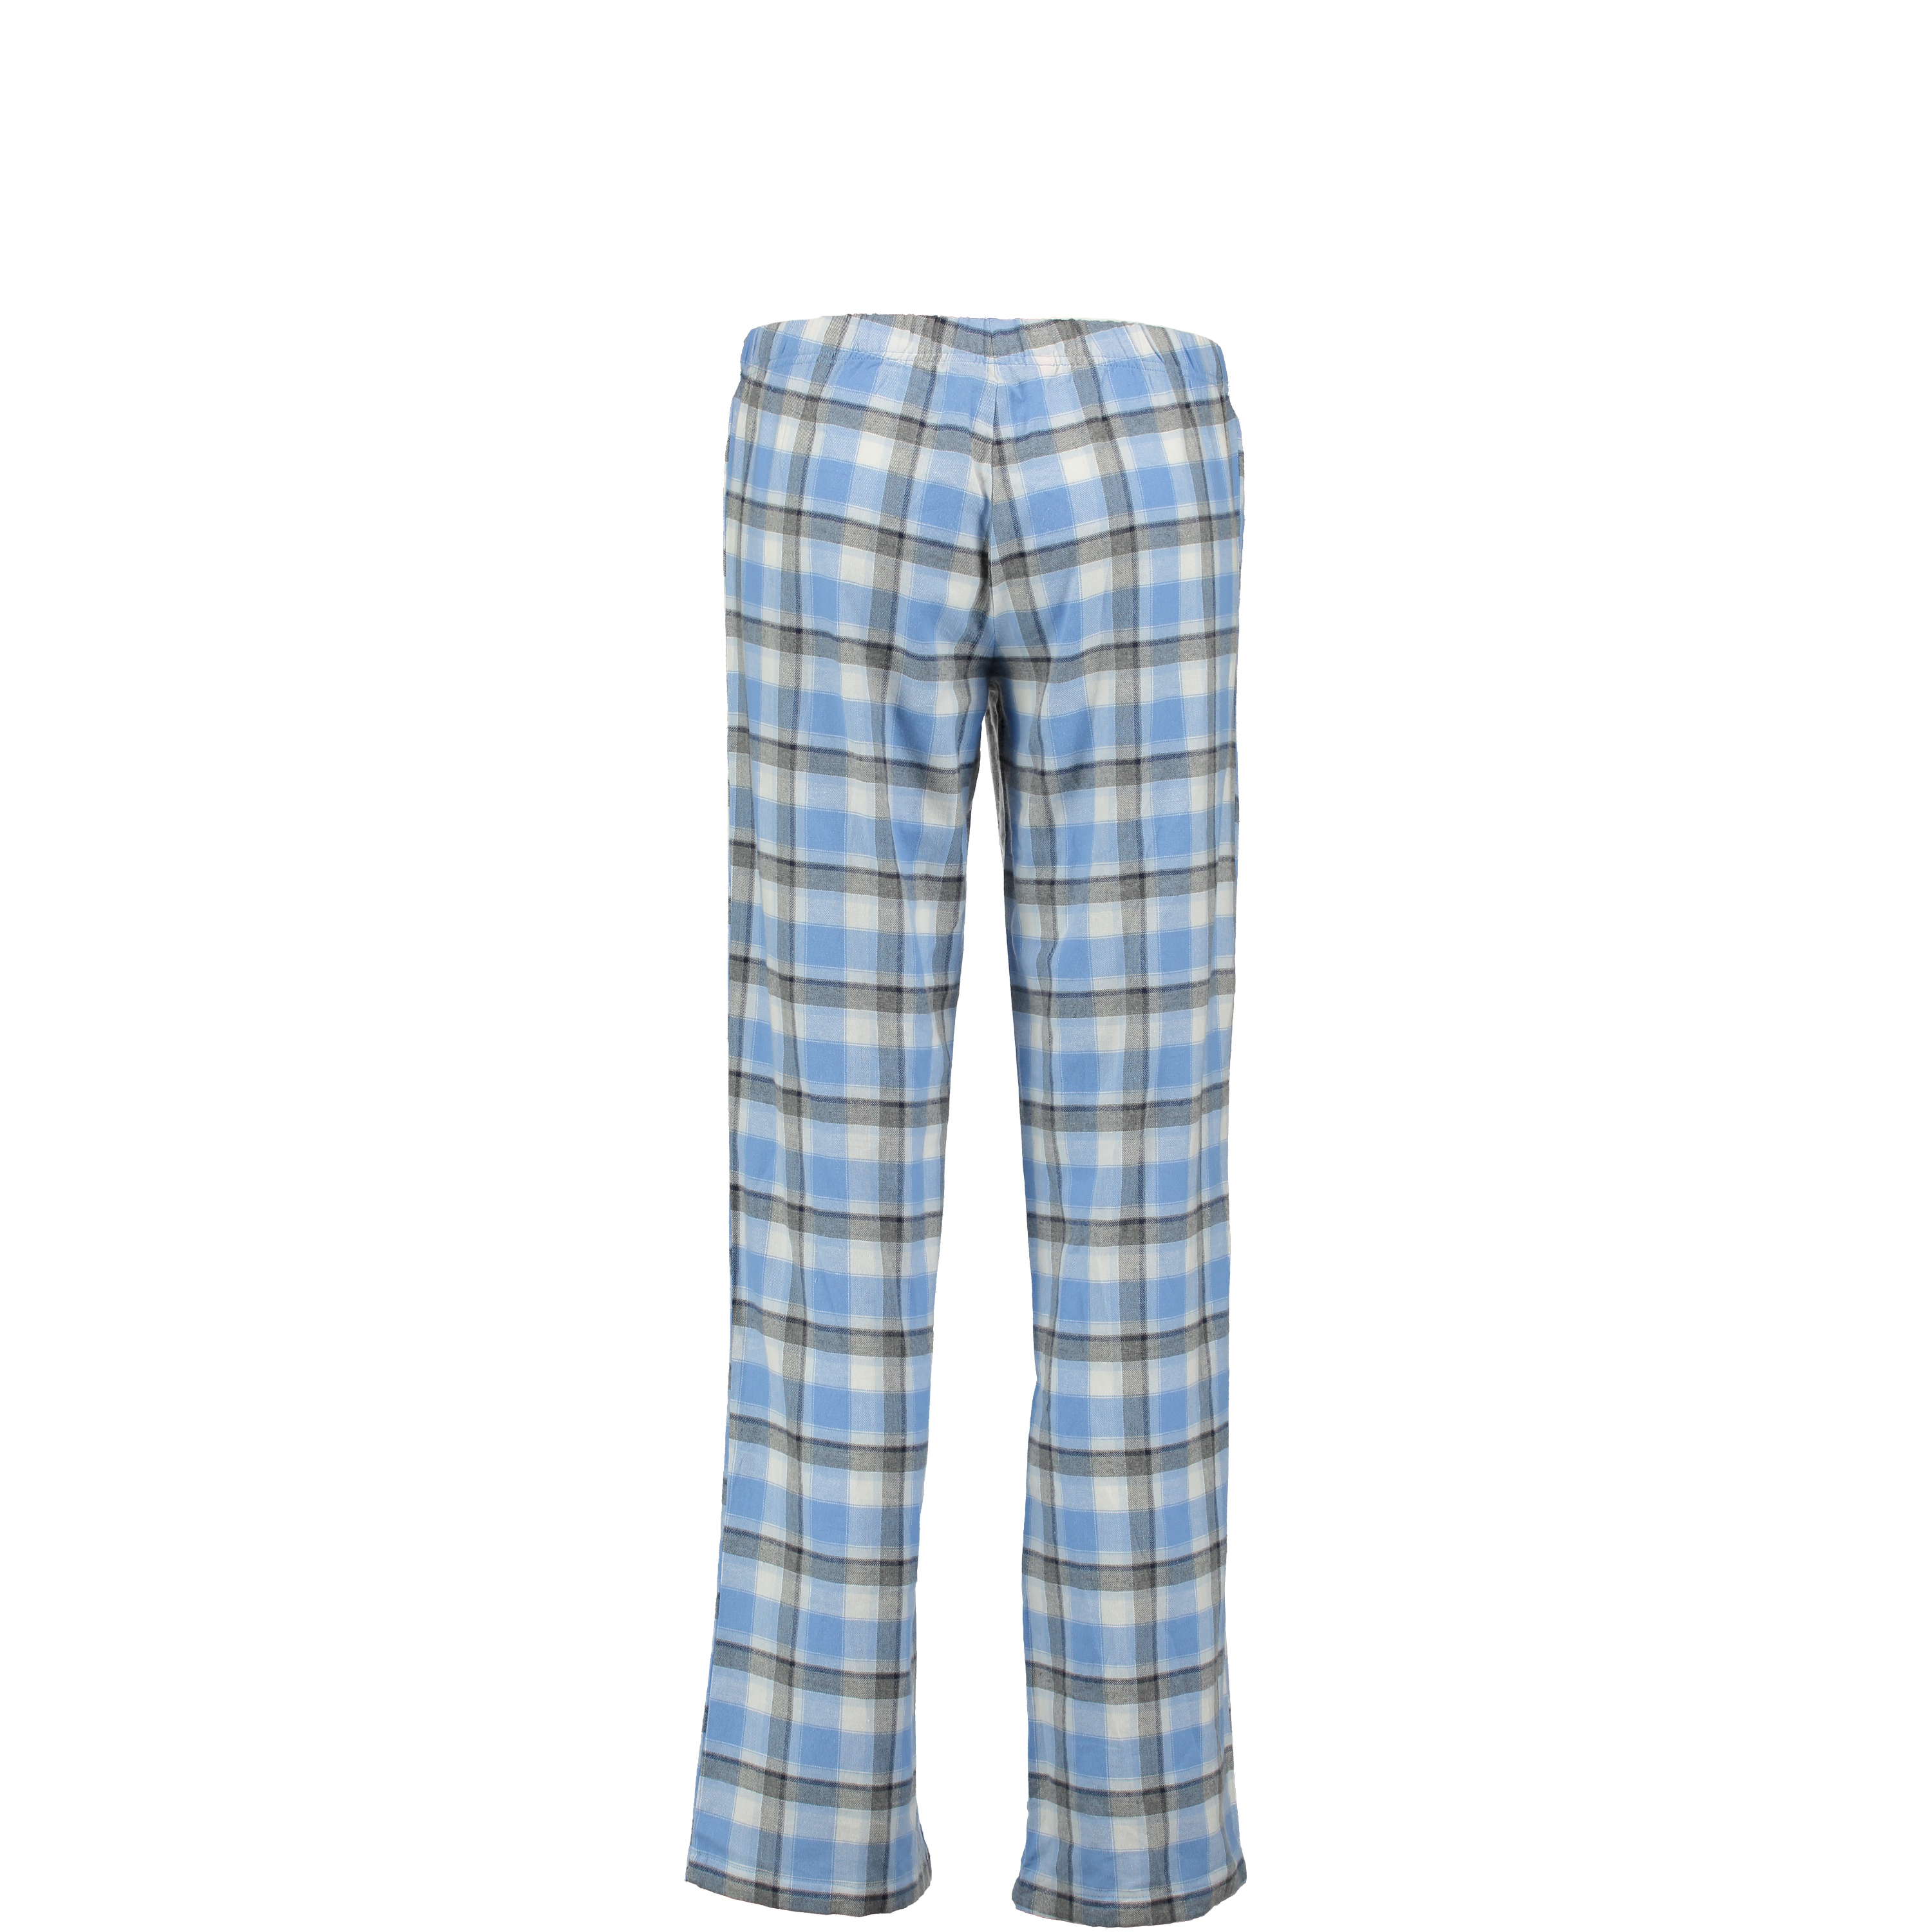 Pyjama pants Papillon butterfly, Niebieski, main